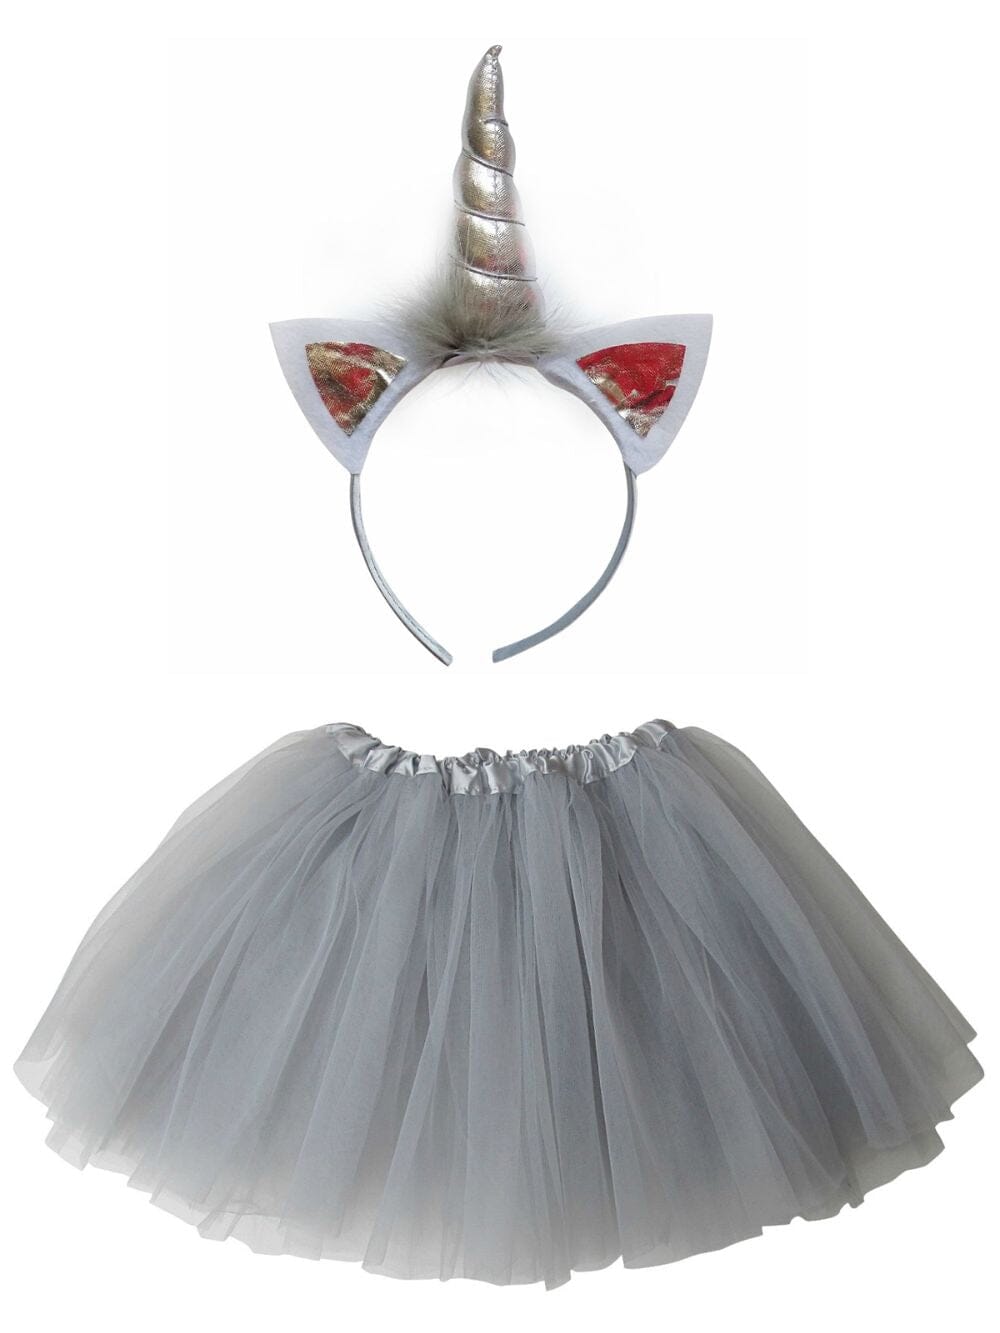 Girls Silver Metallic Unicorn Tutu Skirt Costume Complete Set with Headband Horn - Sydney So Sweet